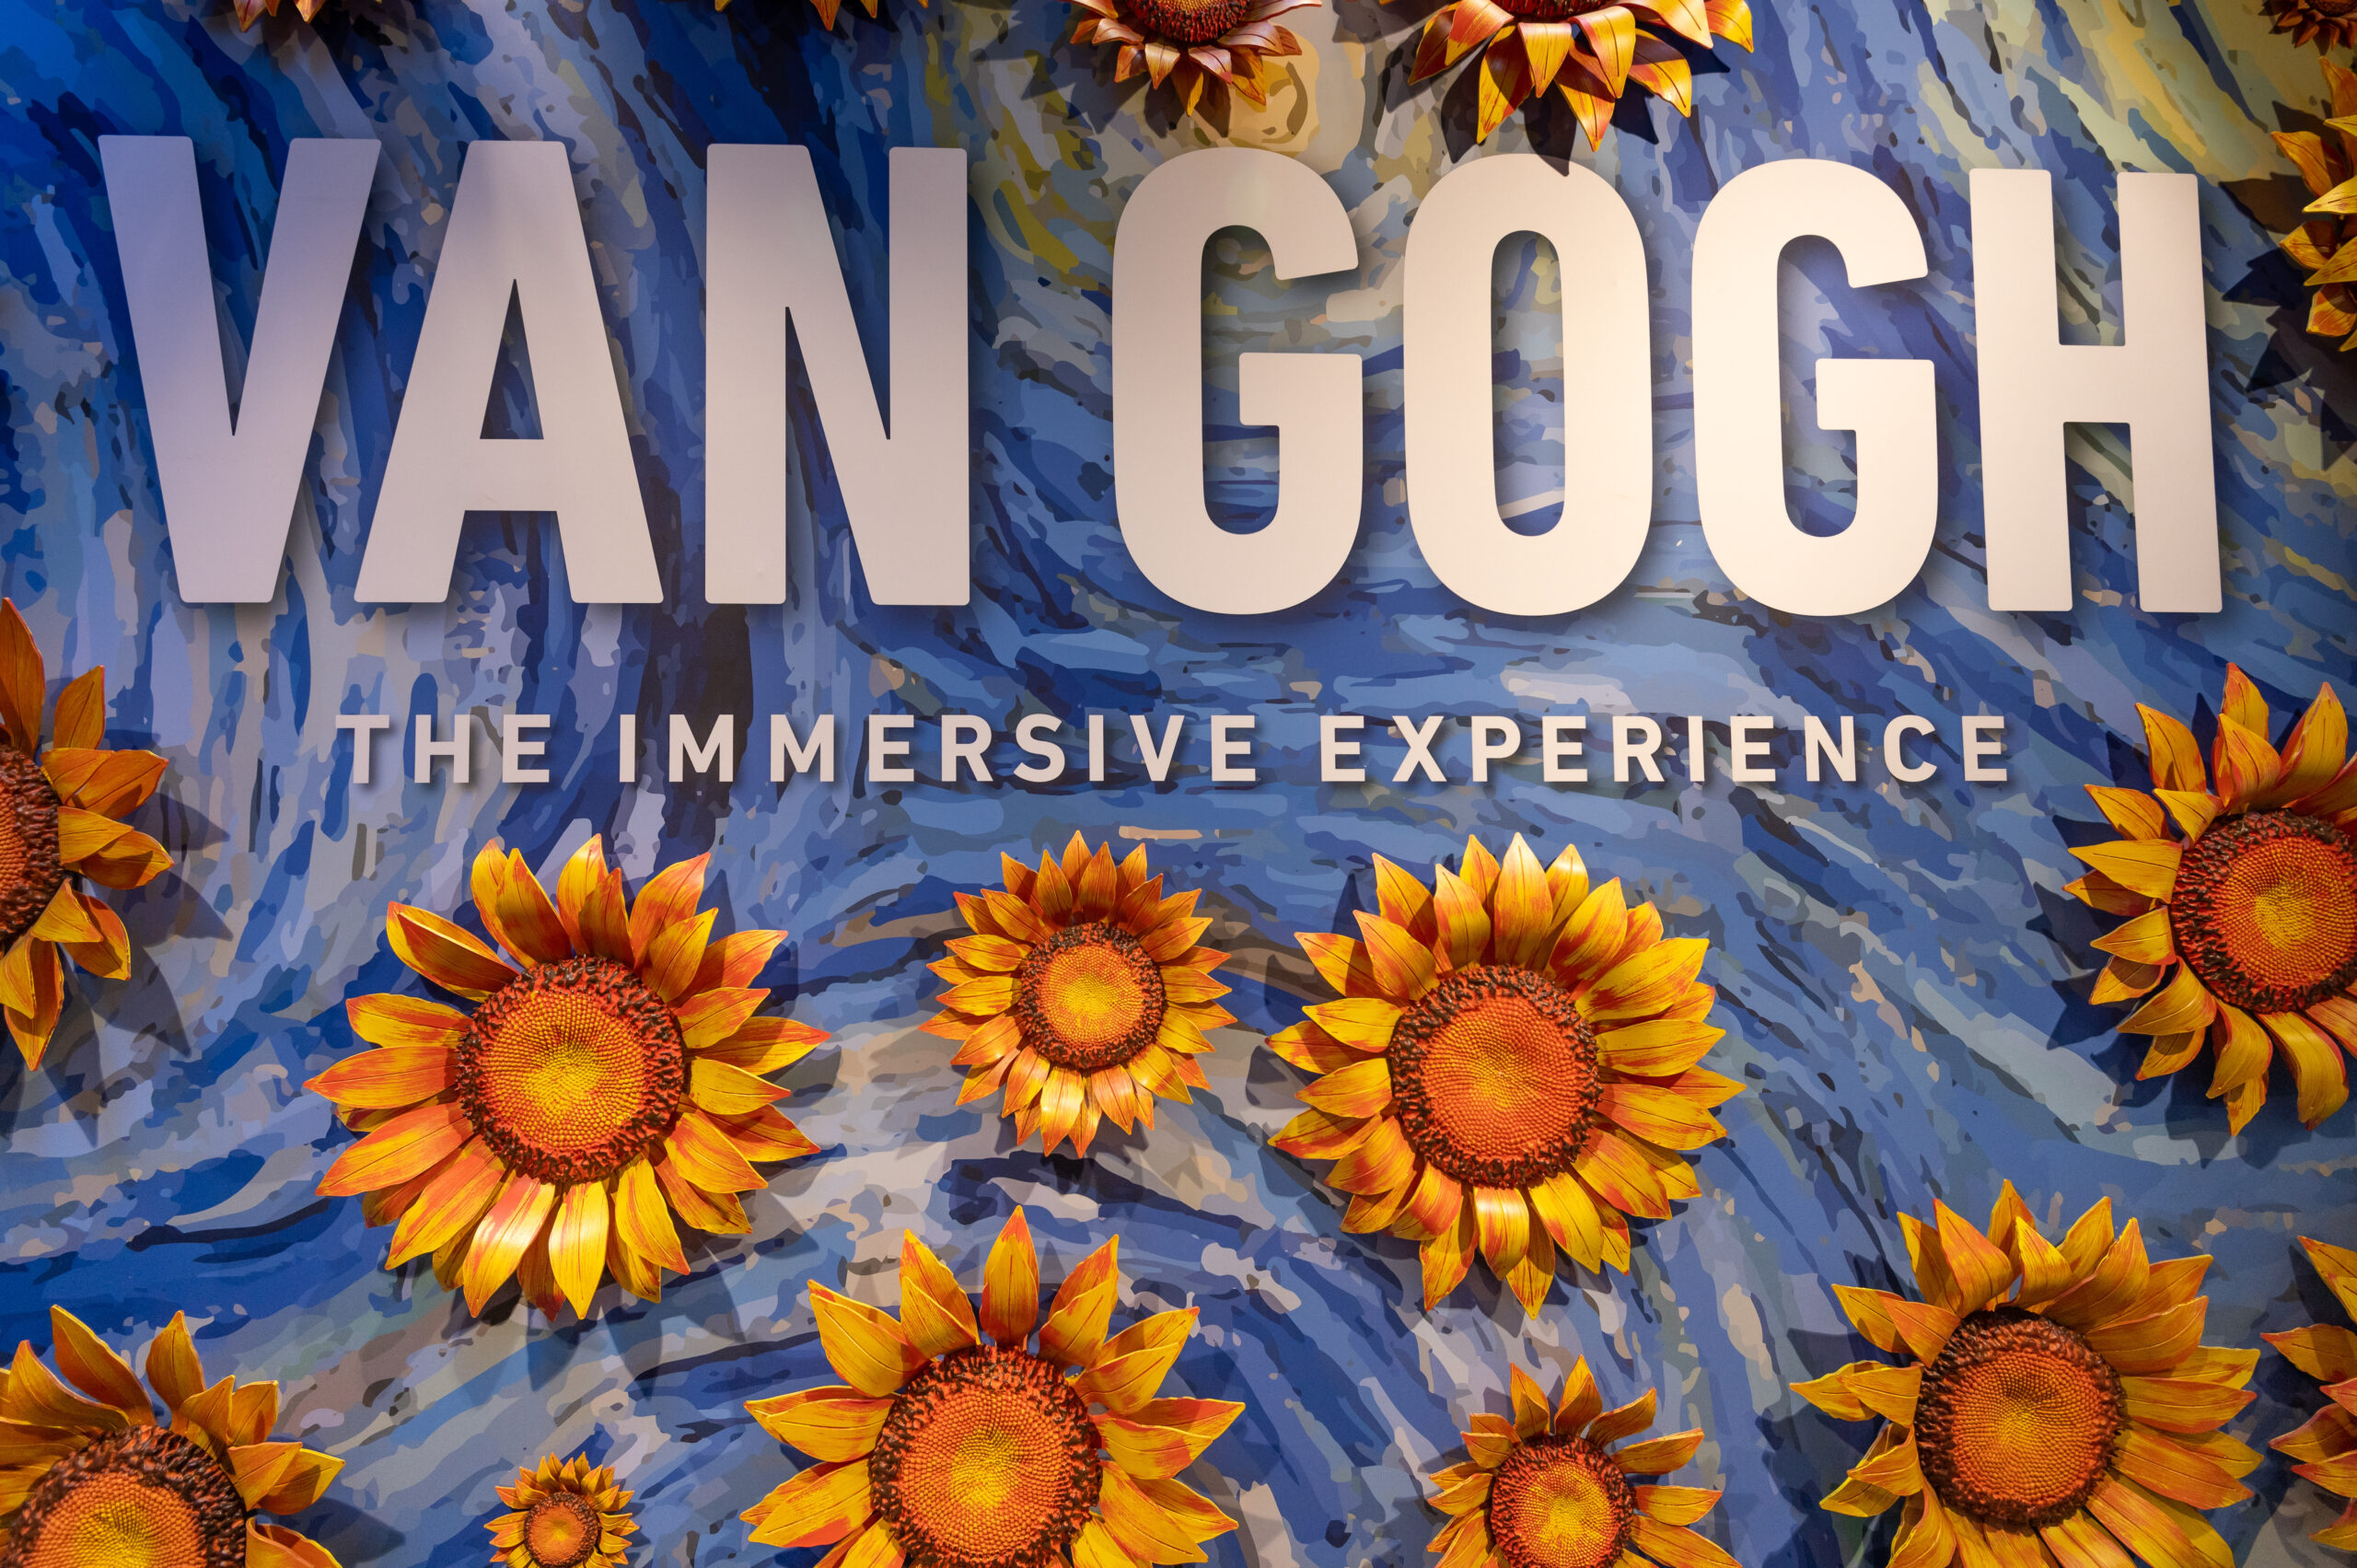 Van Gogh: The Immersive Experience Miami